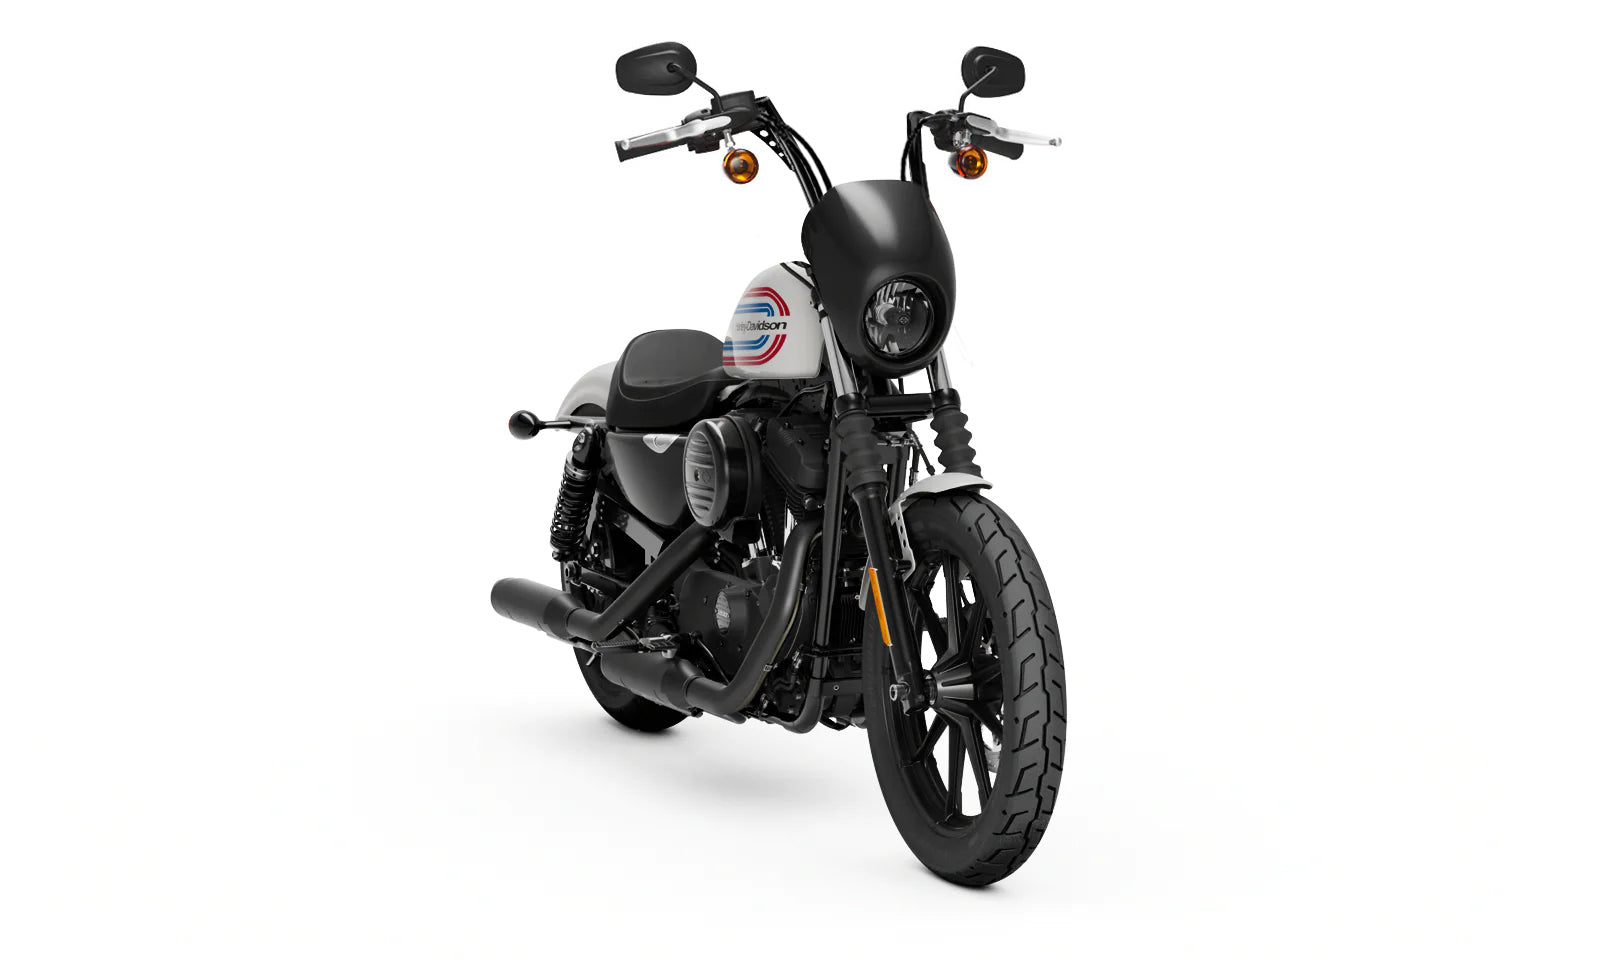 Viking Iron Born 12" Handlebar For Harley Sportster Iron 1200 Gloss Black Bag on Bike View @expand